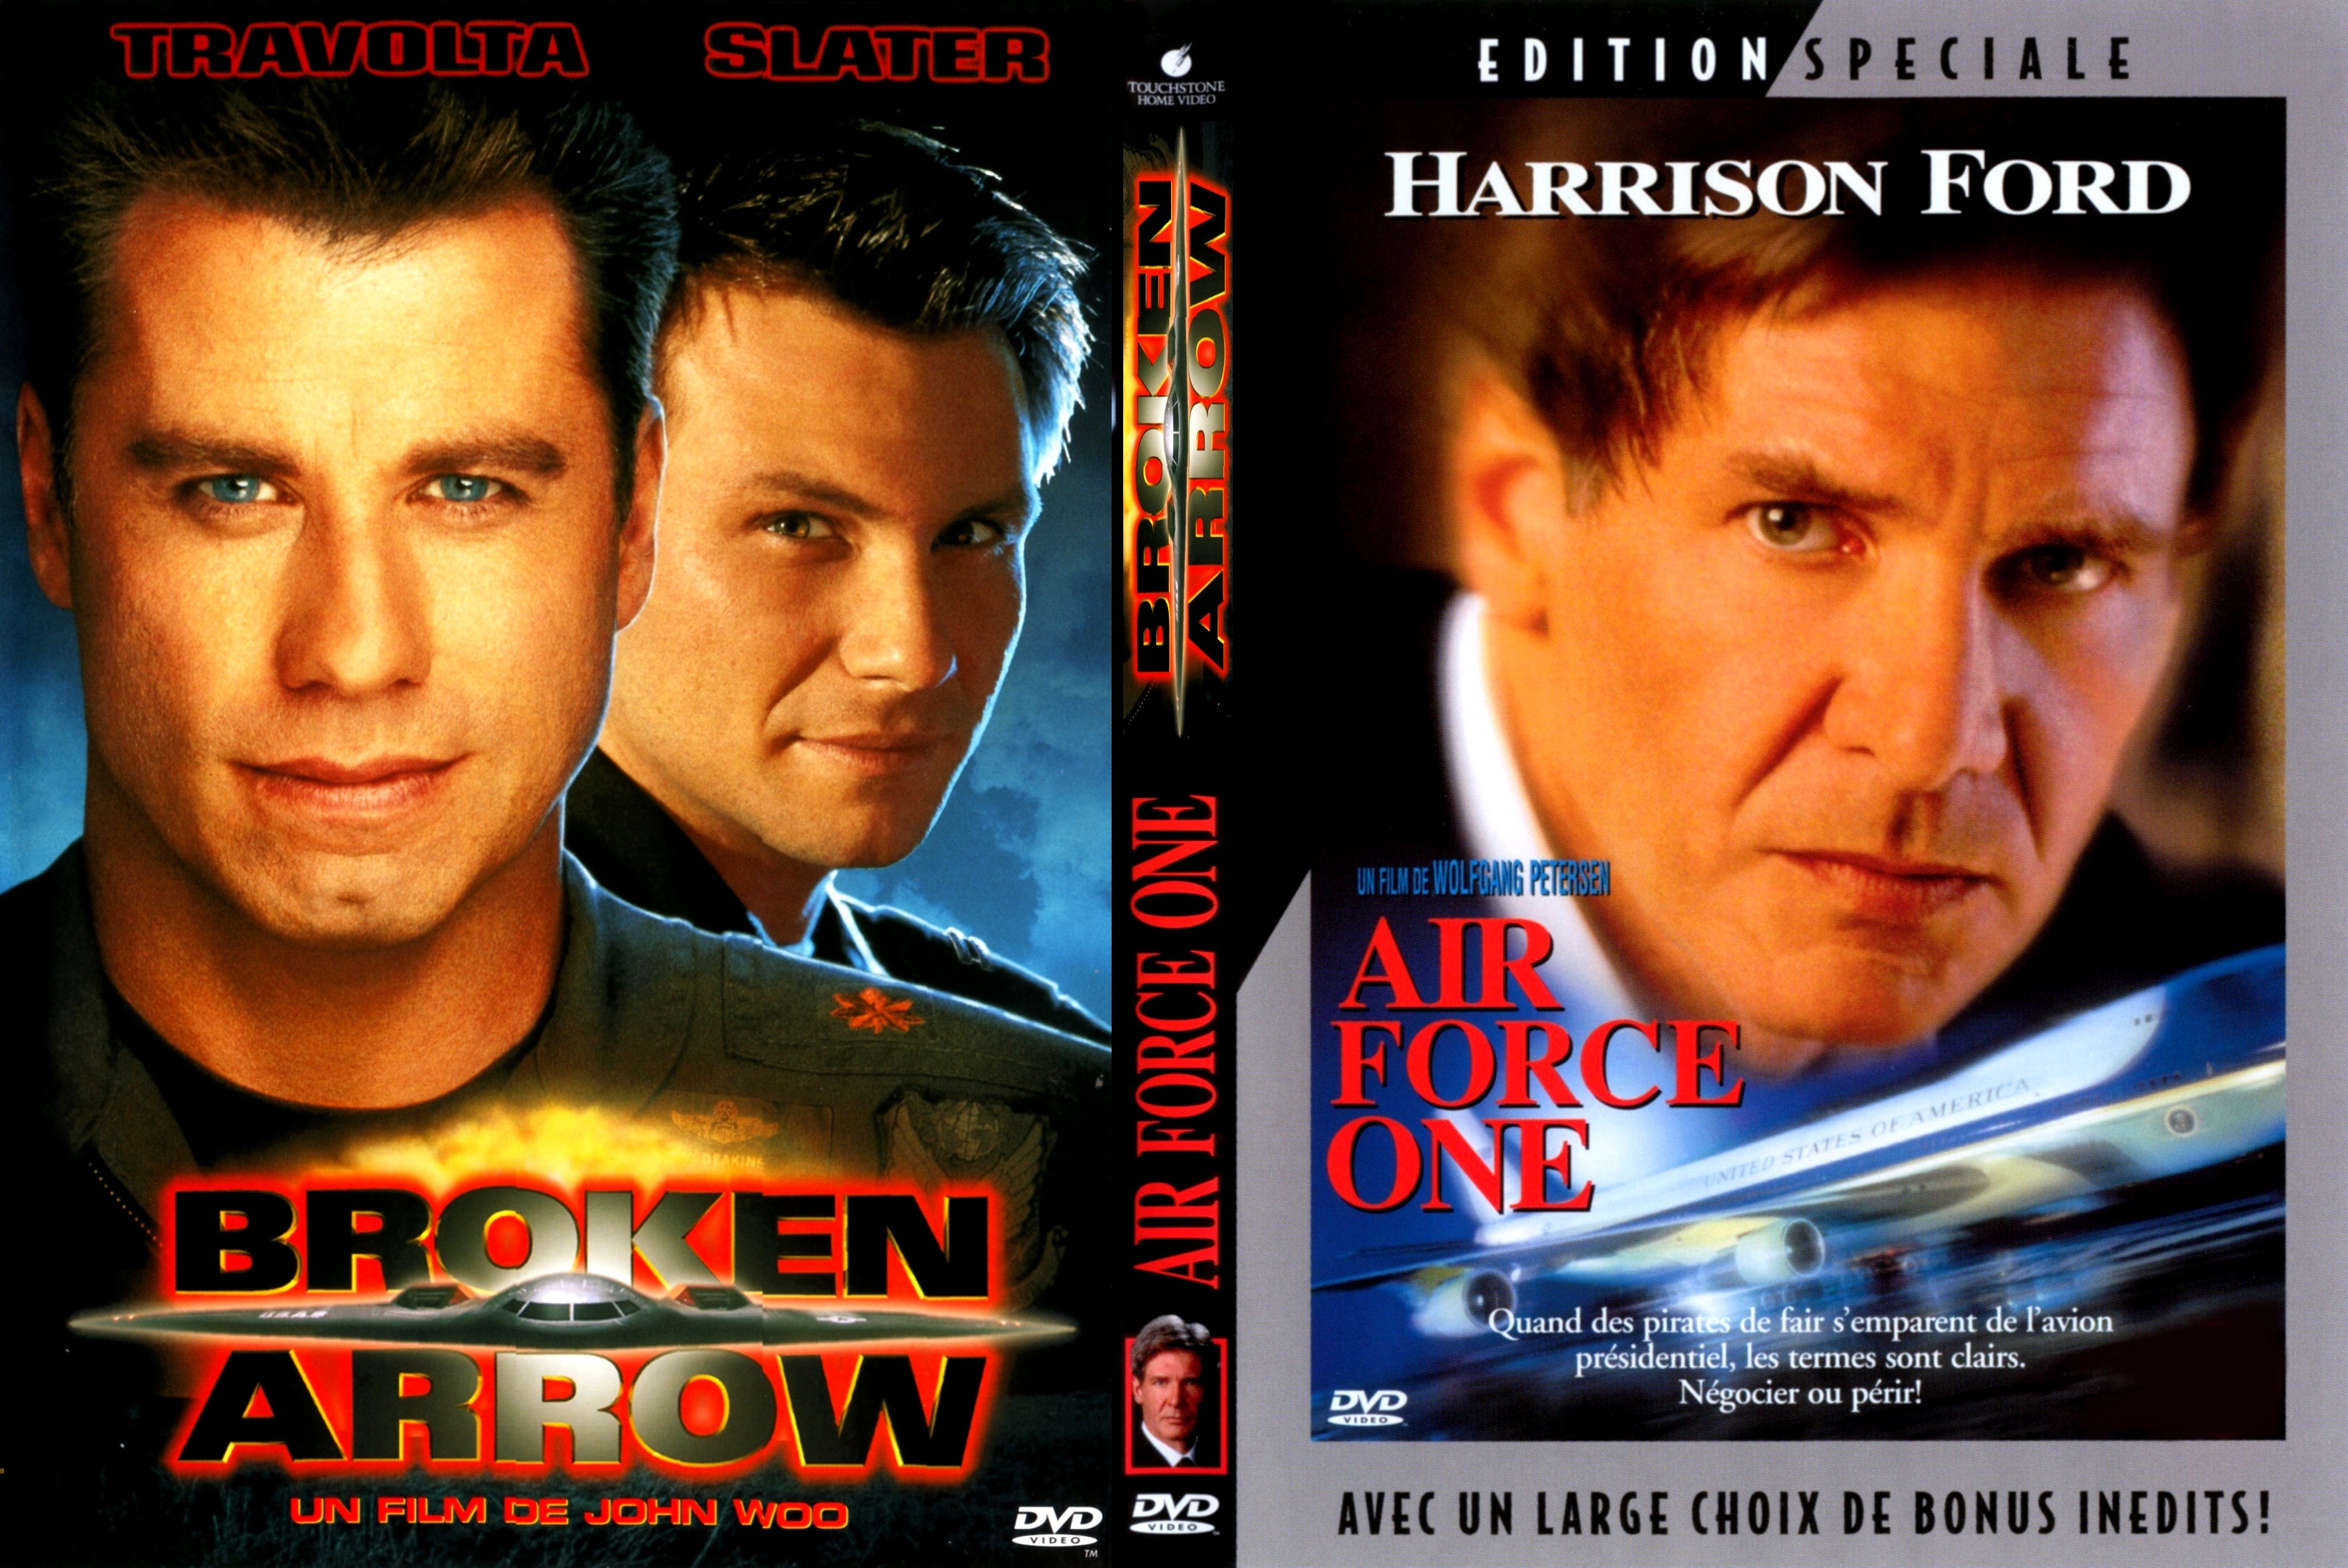 Jaquette DVD Air force one + Broken Arrow